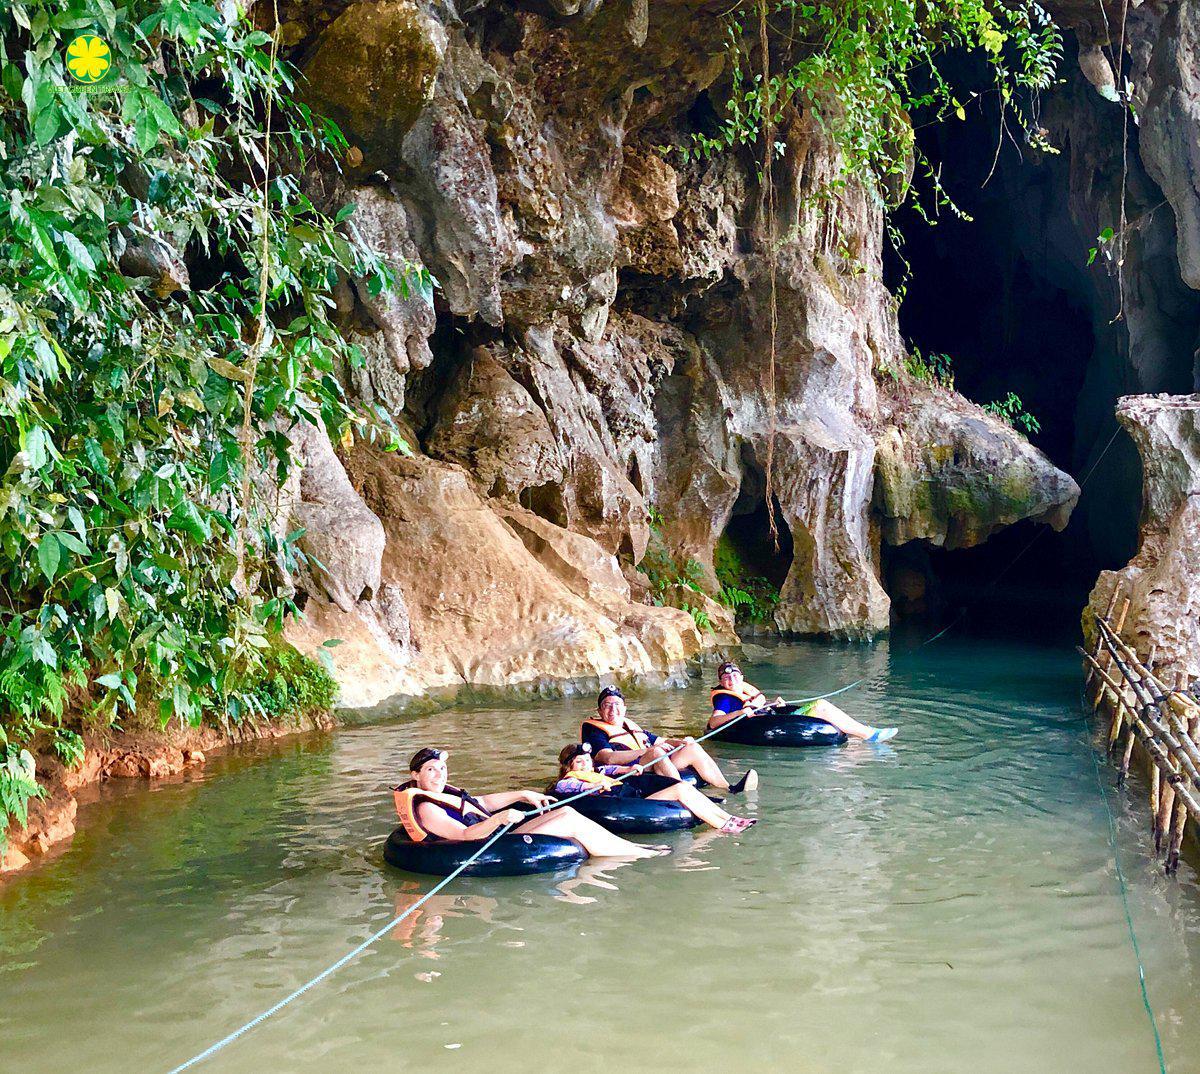 Laos Nature and Culture 7 days tour - Surprising you